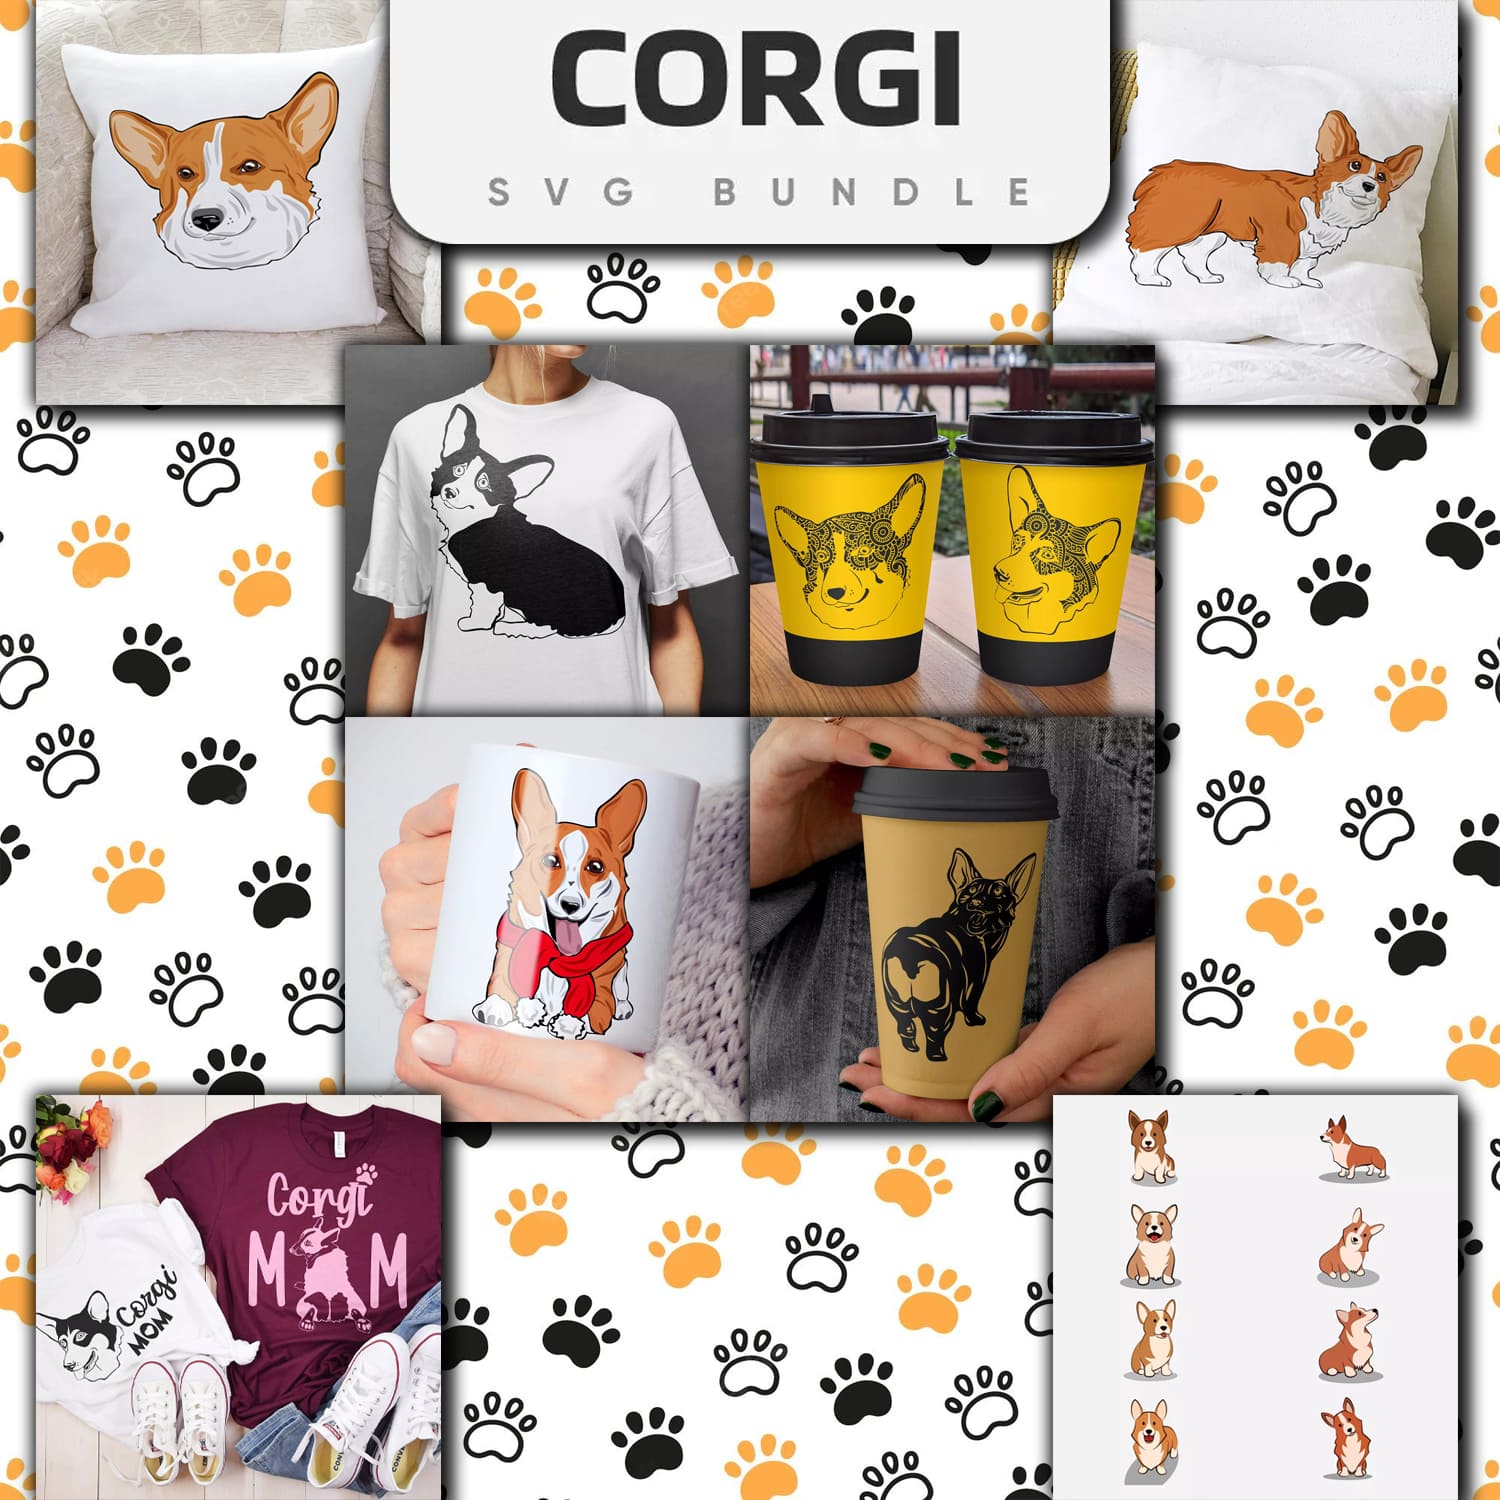 Collage of photos with a corgi t - shirt.